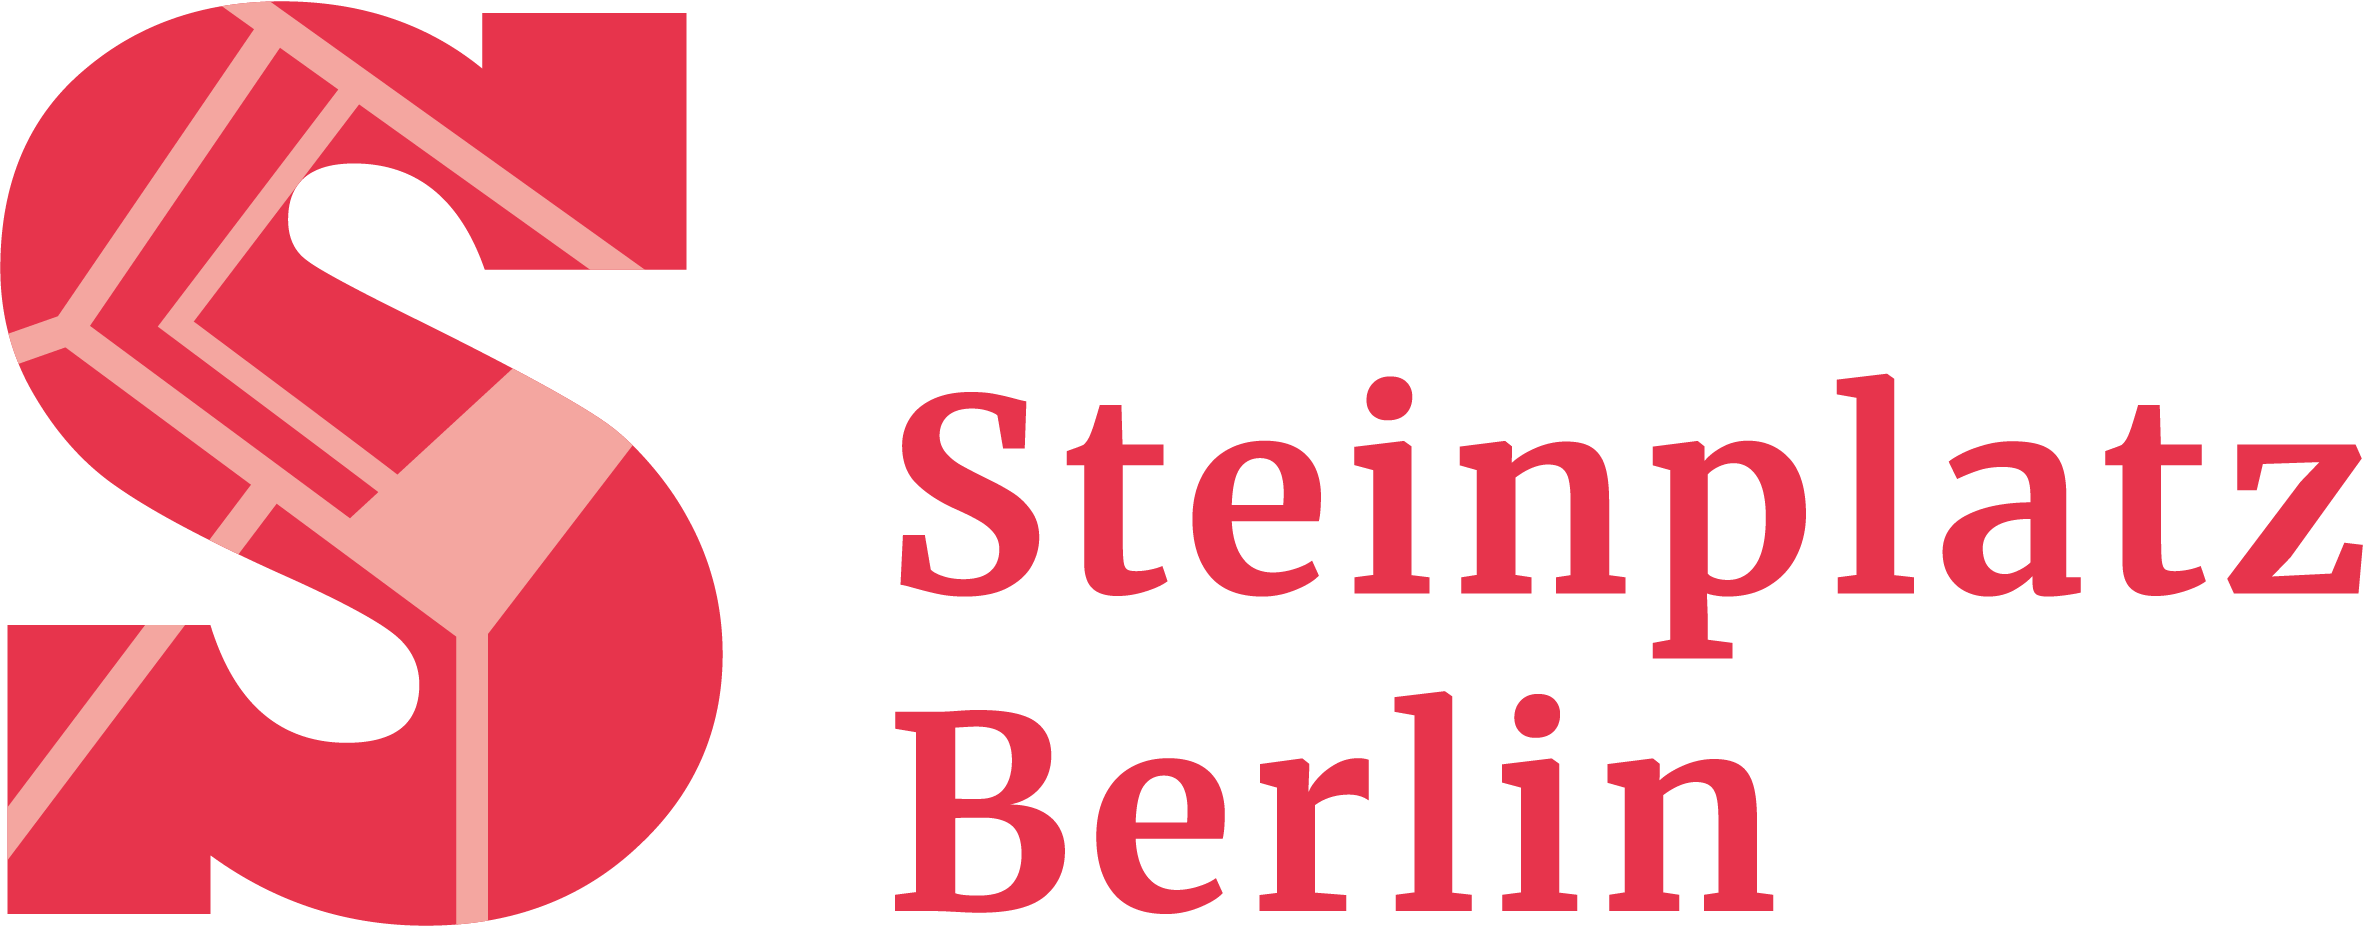 Steinplatz Berlin